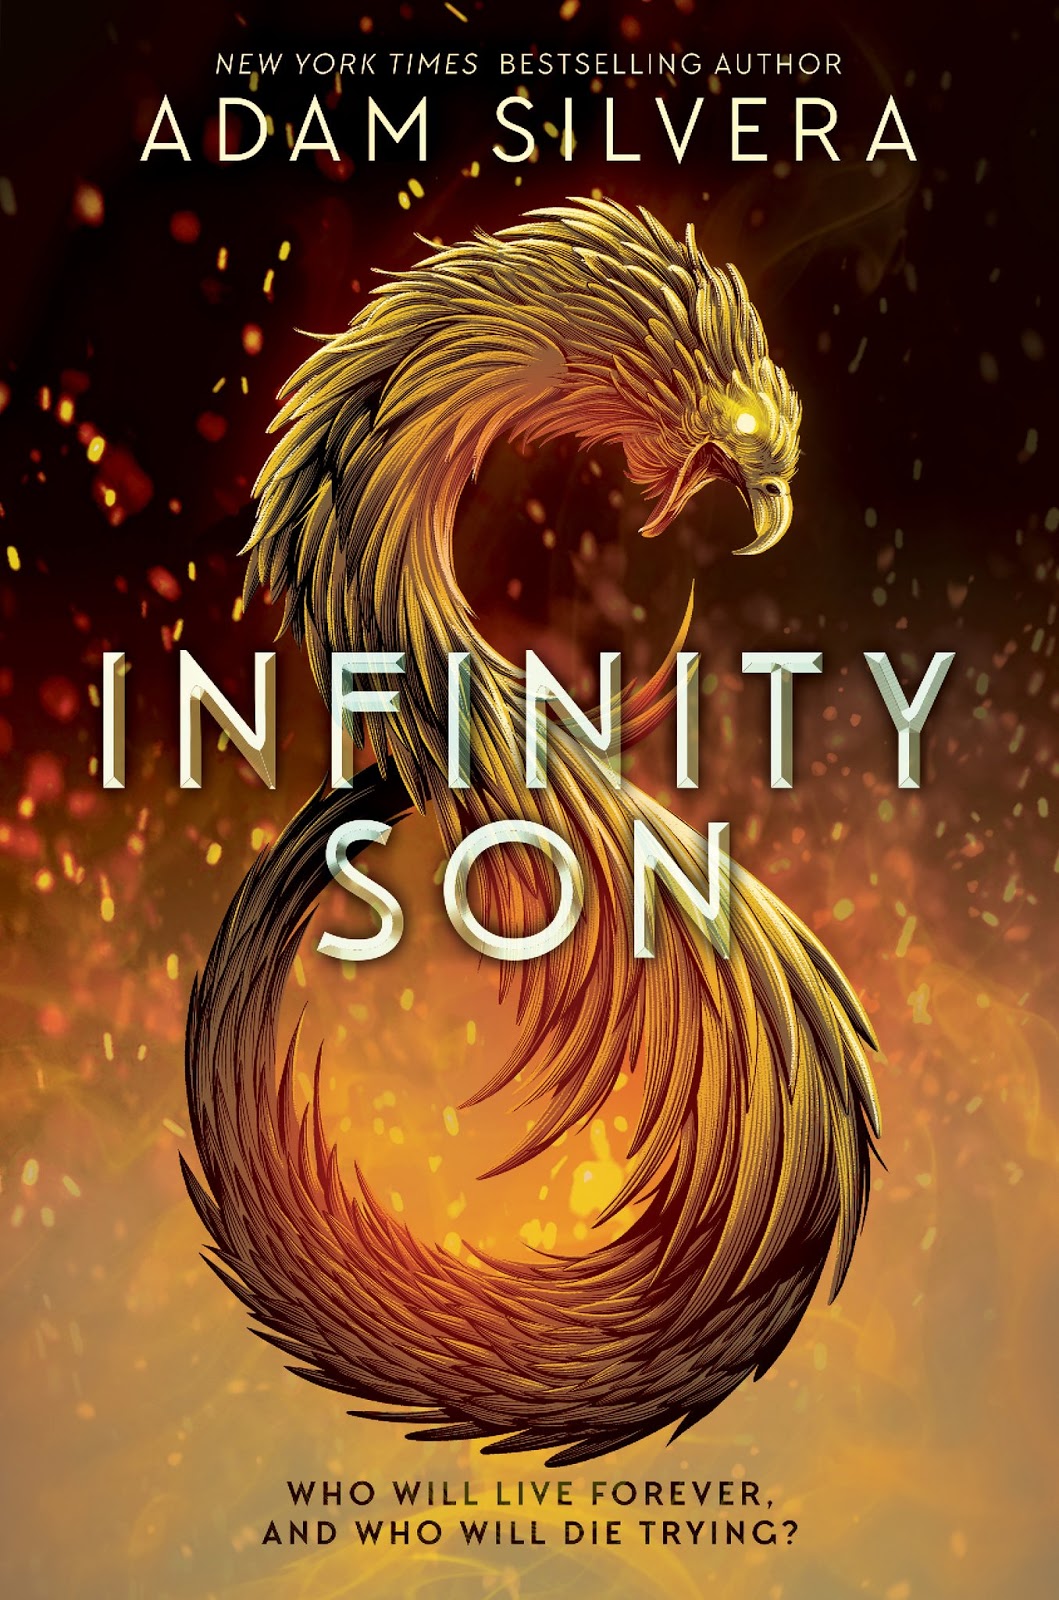 Infinity Son by Adam Silvera